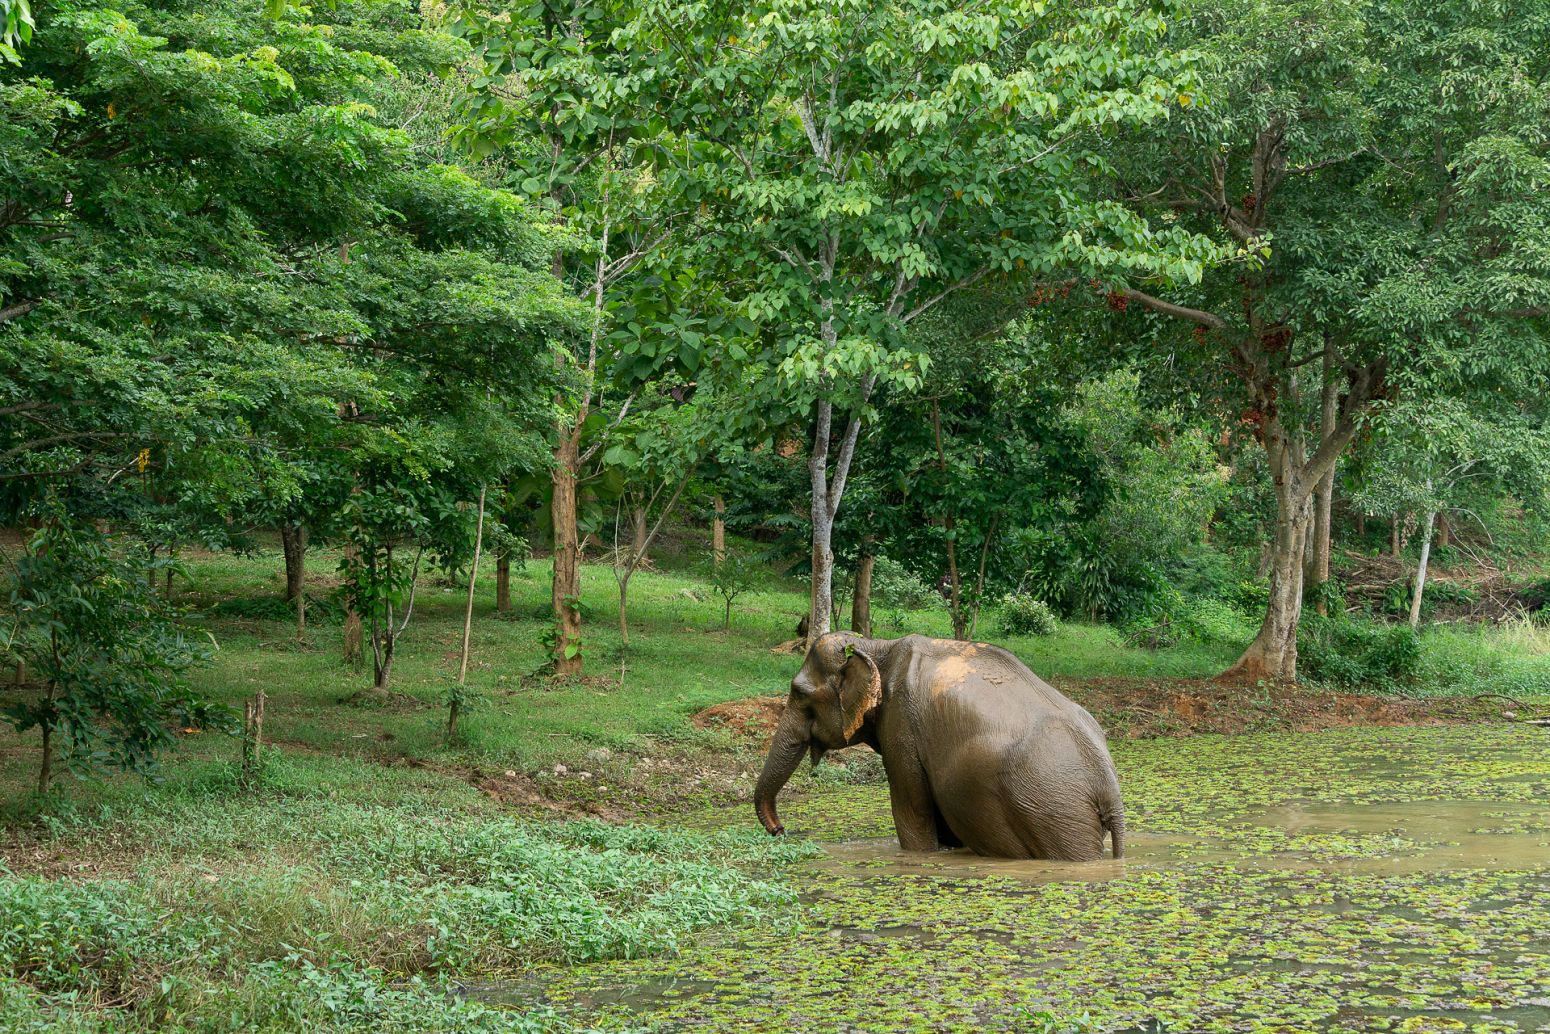 Elephant Conservation Center, Laos